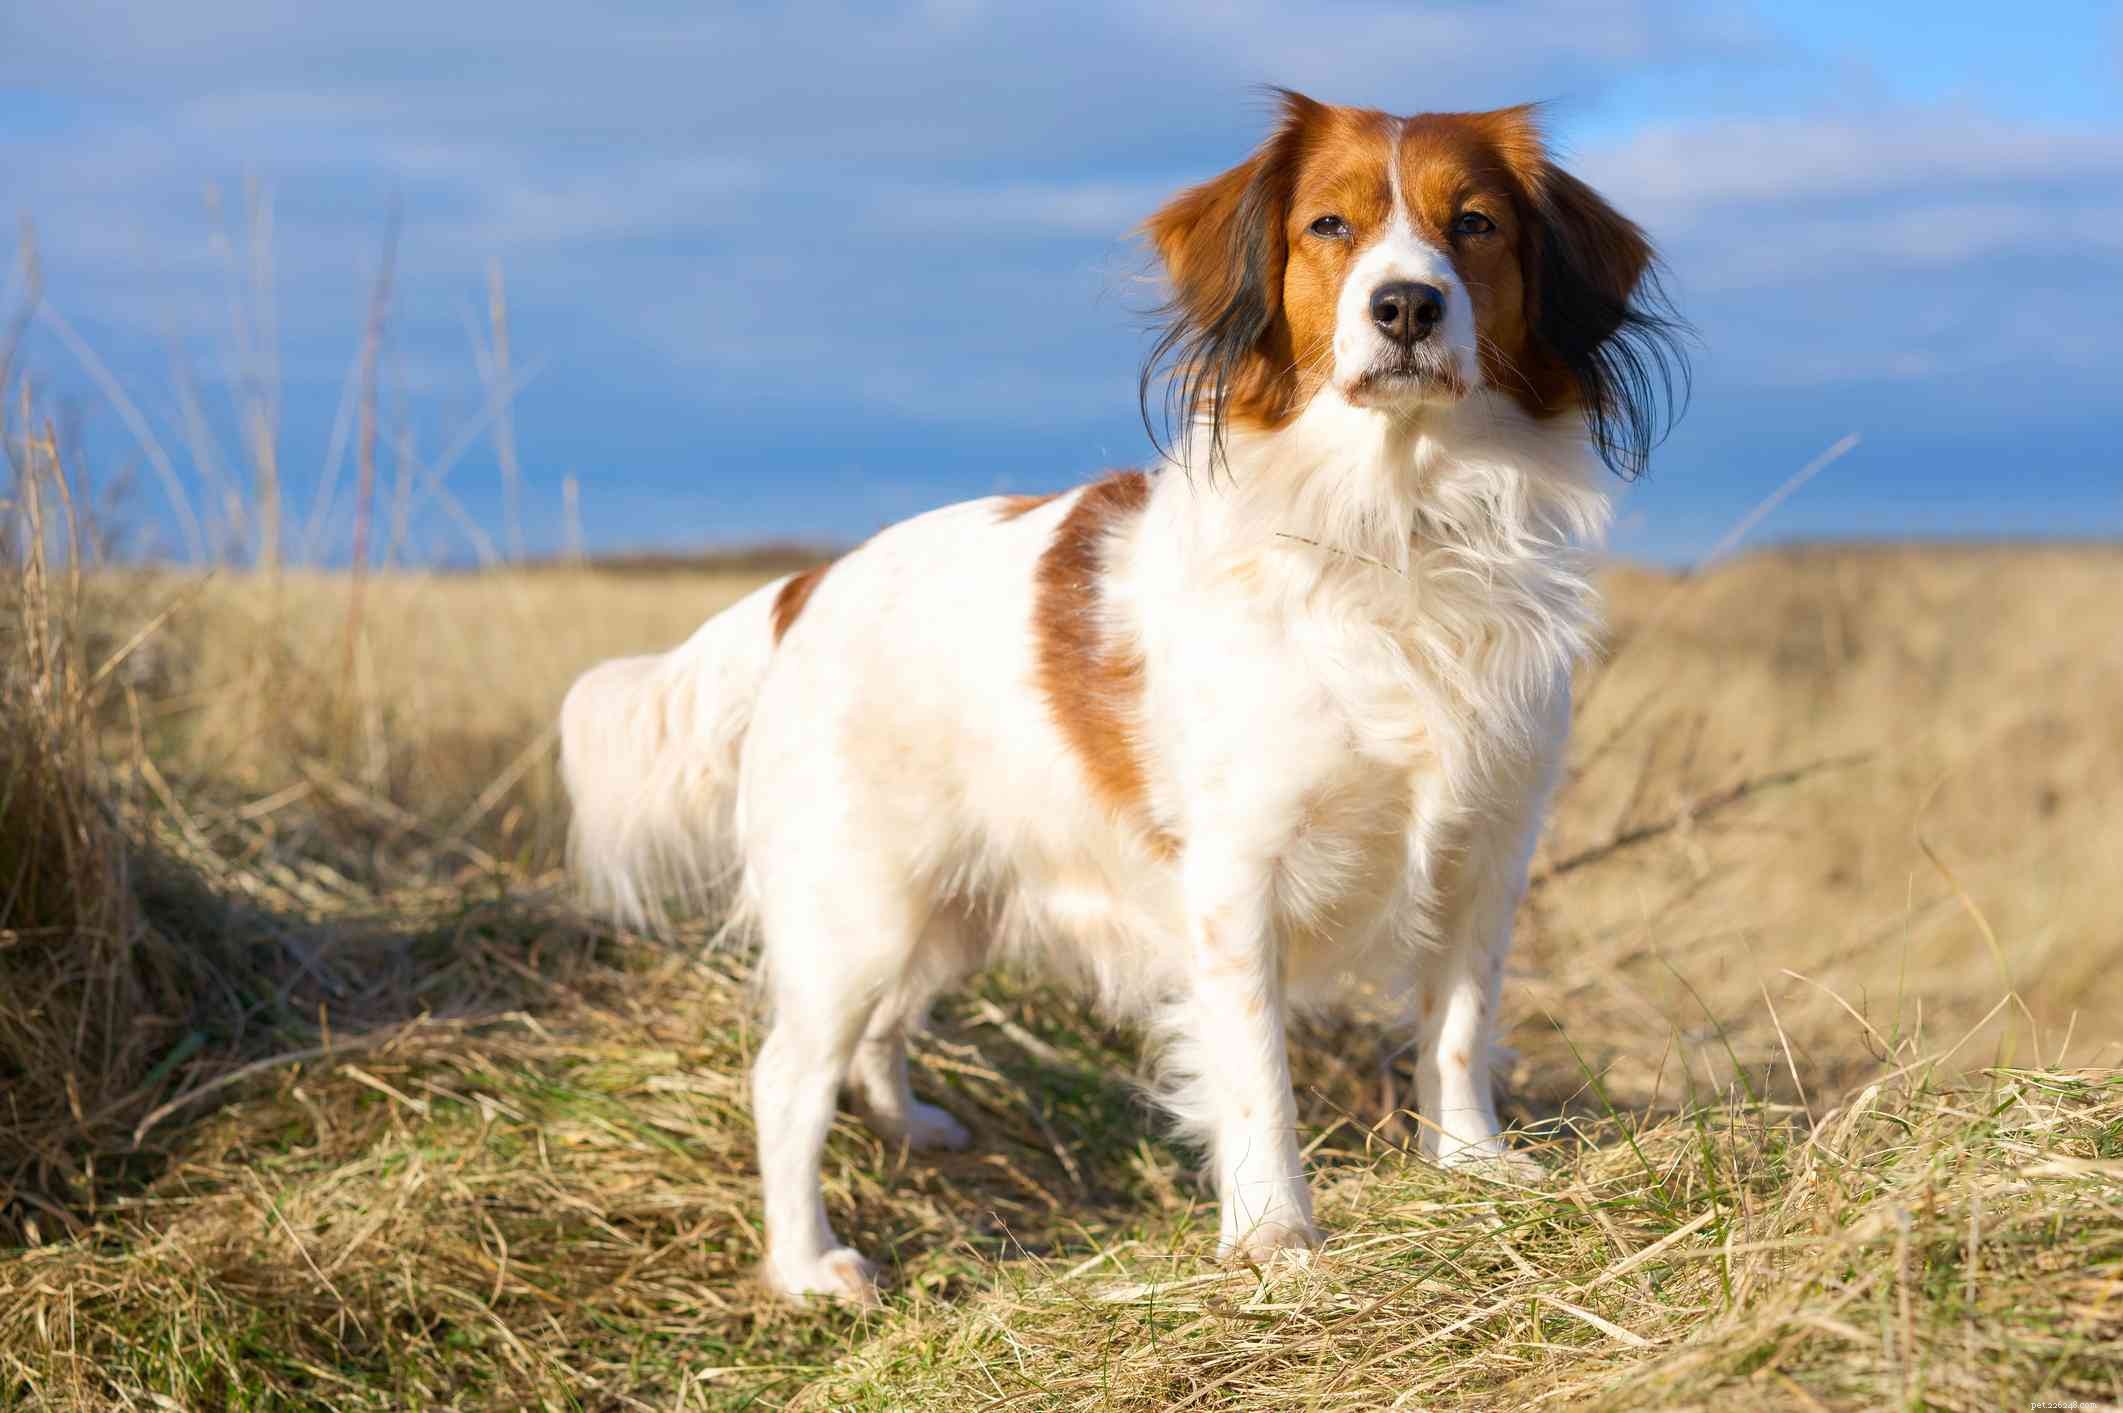 Kooikerhondje (Kooiker):profilo della razza canina